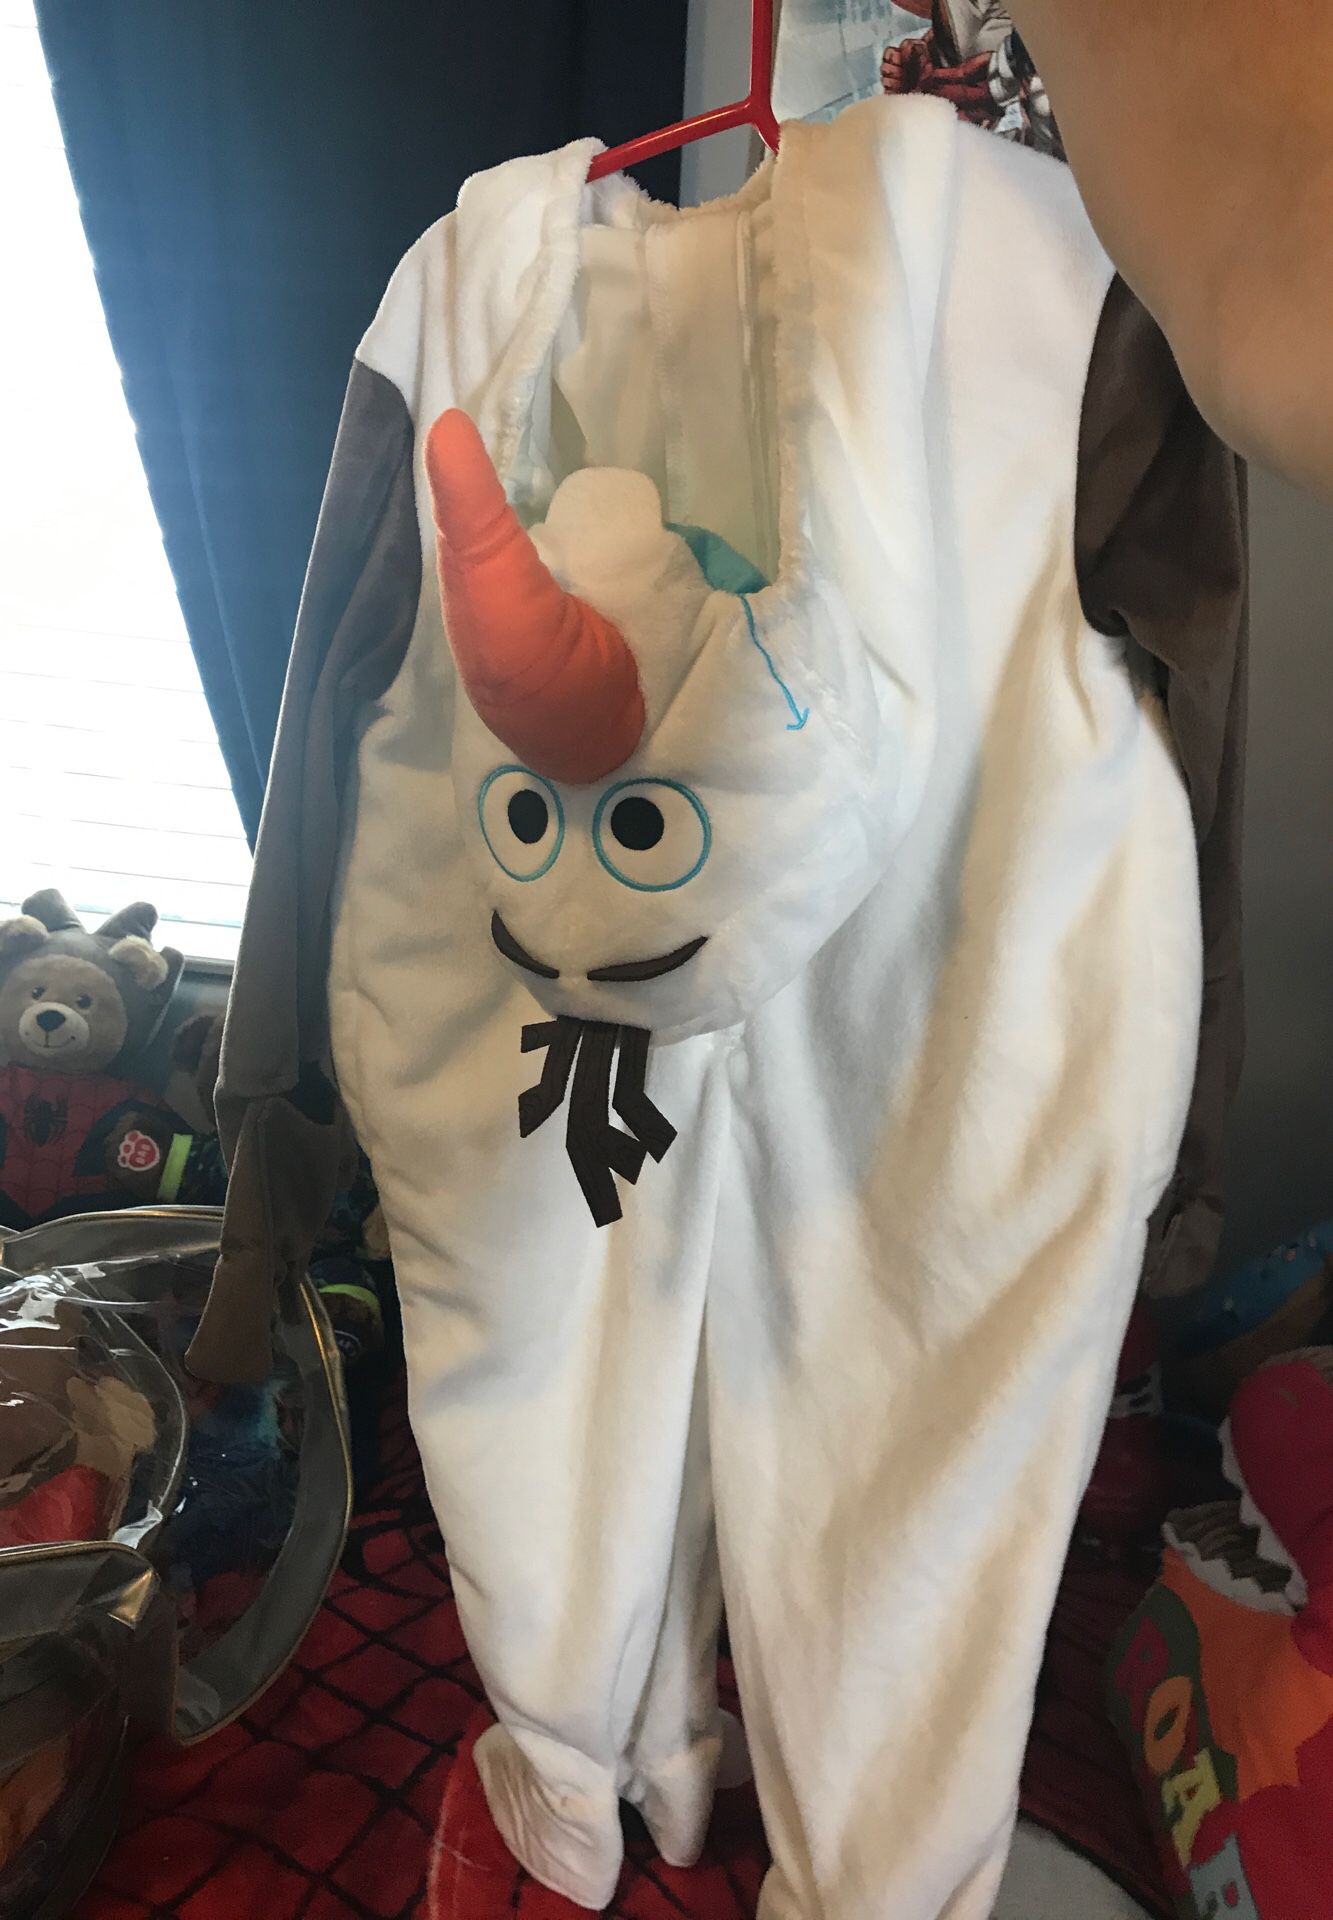 Disney store Olaf costume